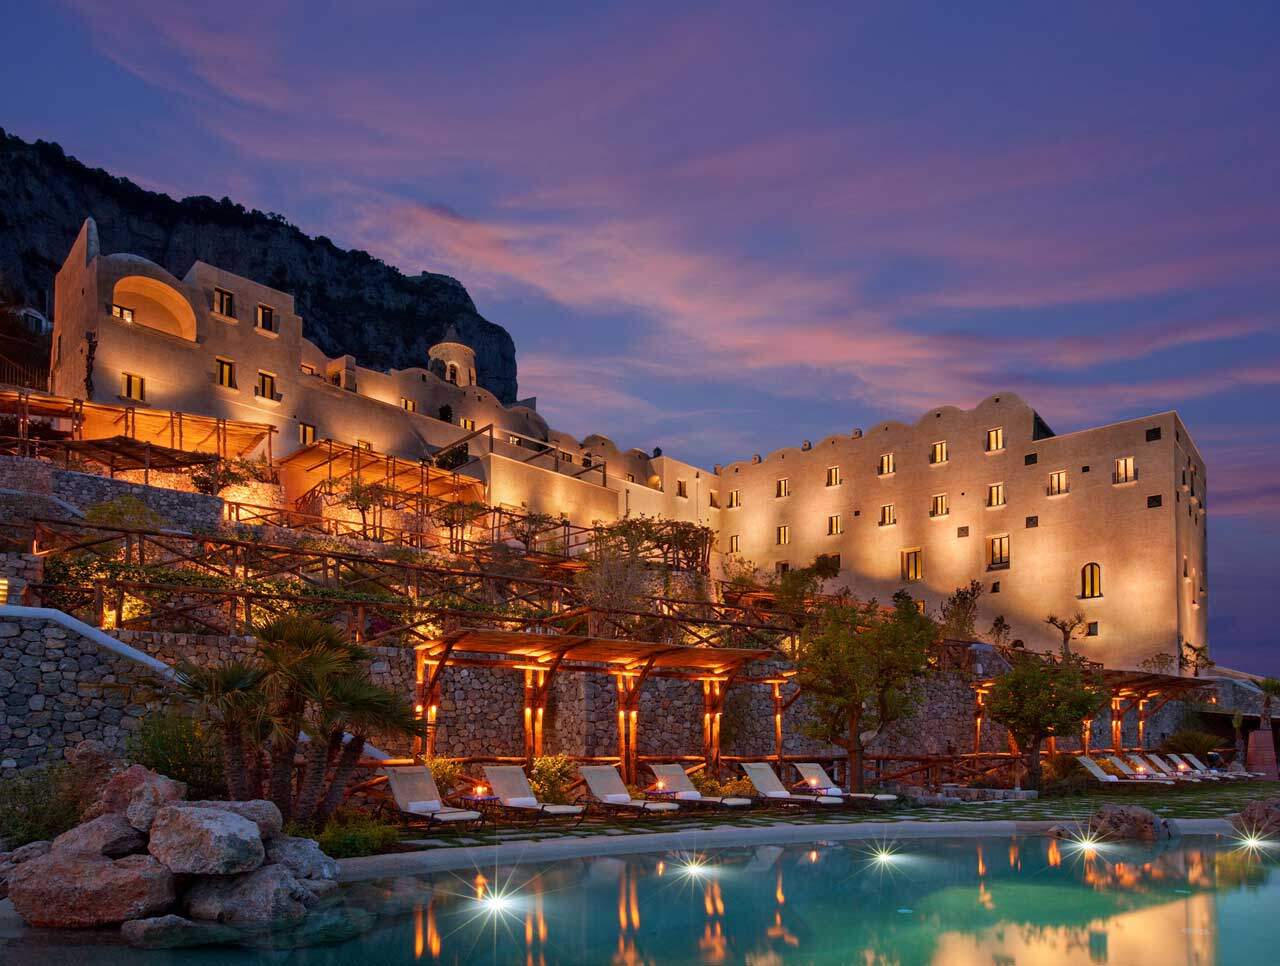 Monastero Santa Rosa Hotel and spa - Amalfi Coast (9)